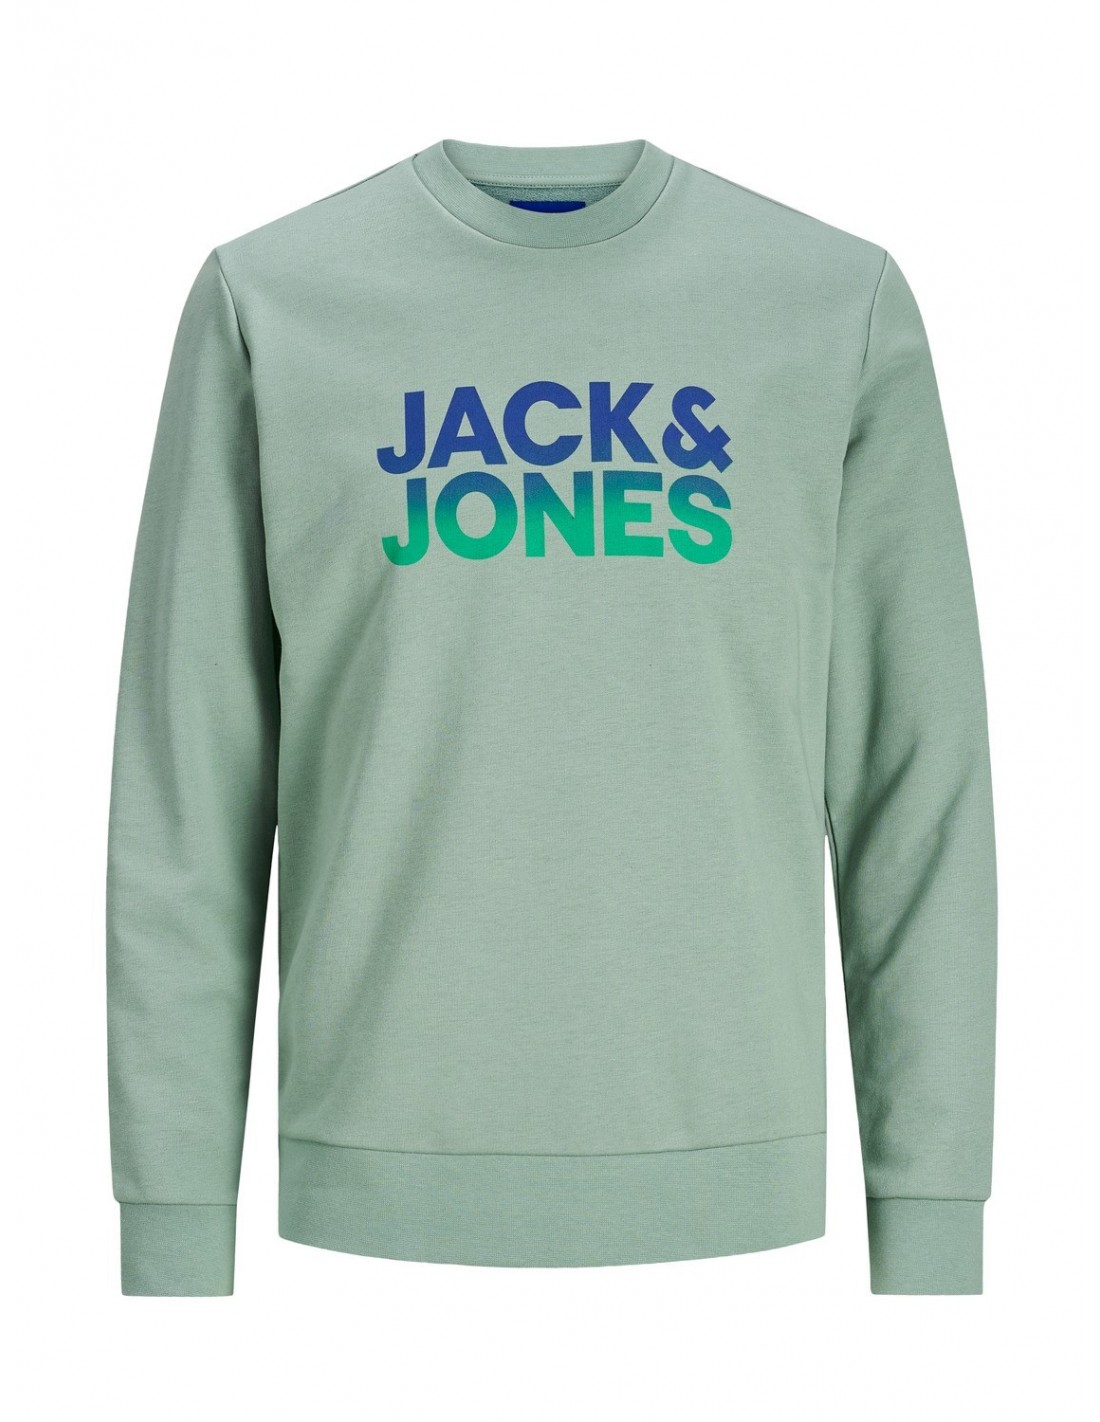 Interminable mago granizo Jack & Jones hombre sudadera cuello redondo color light green